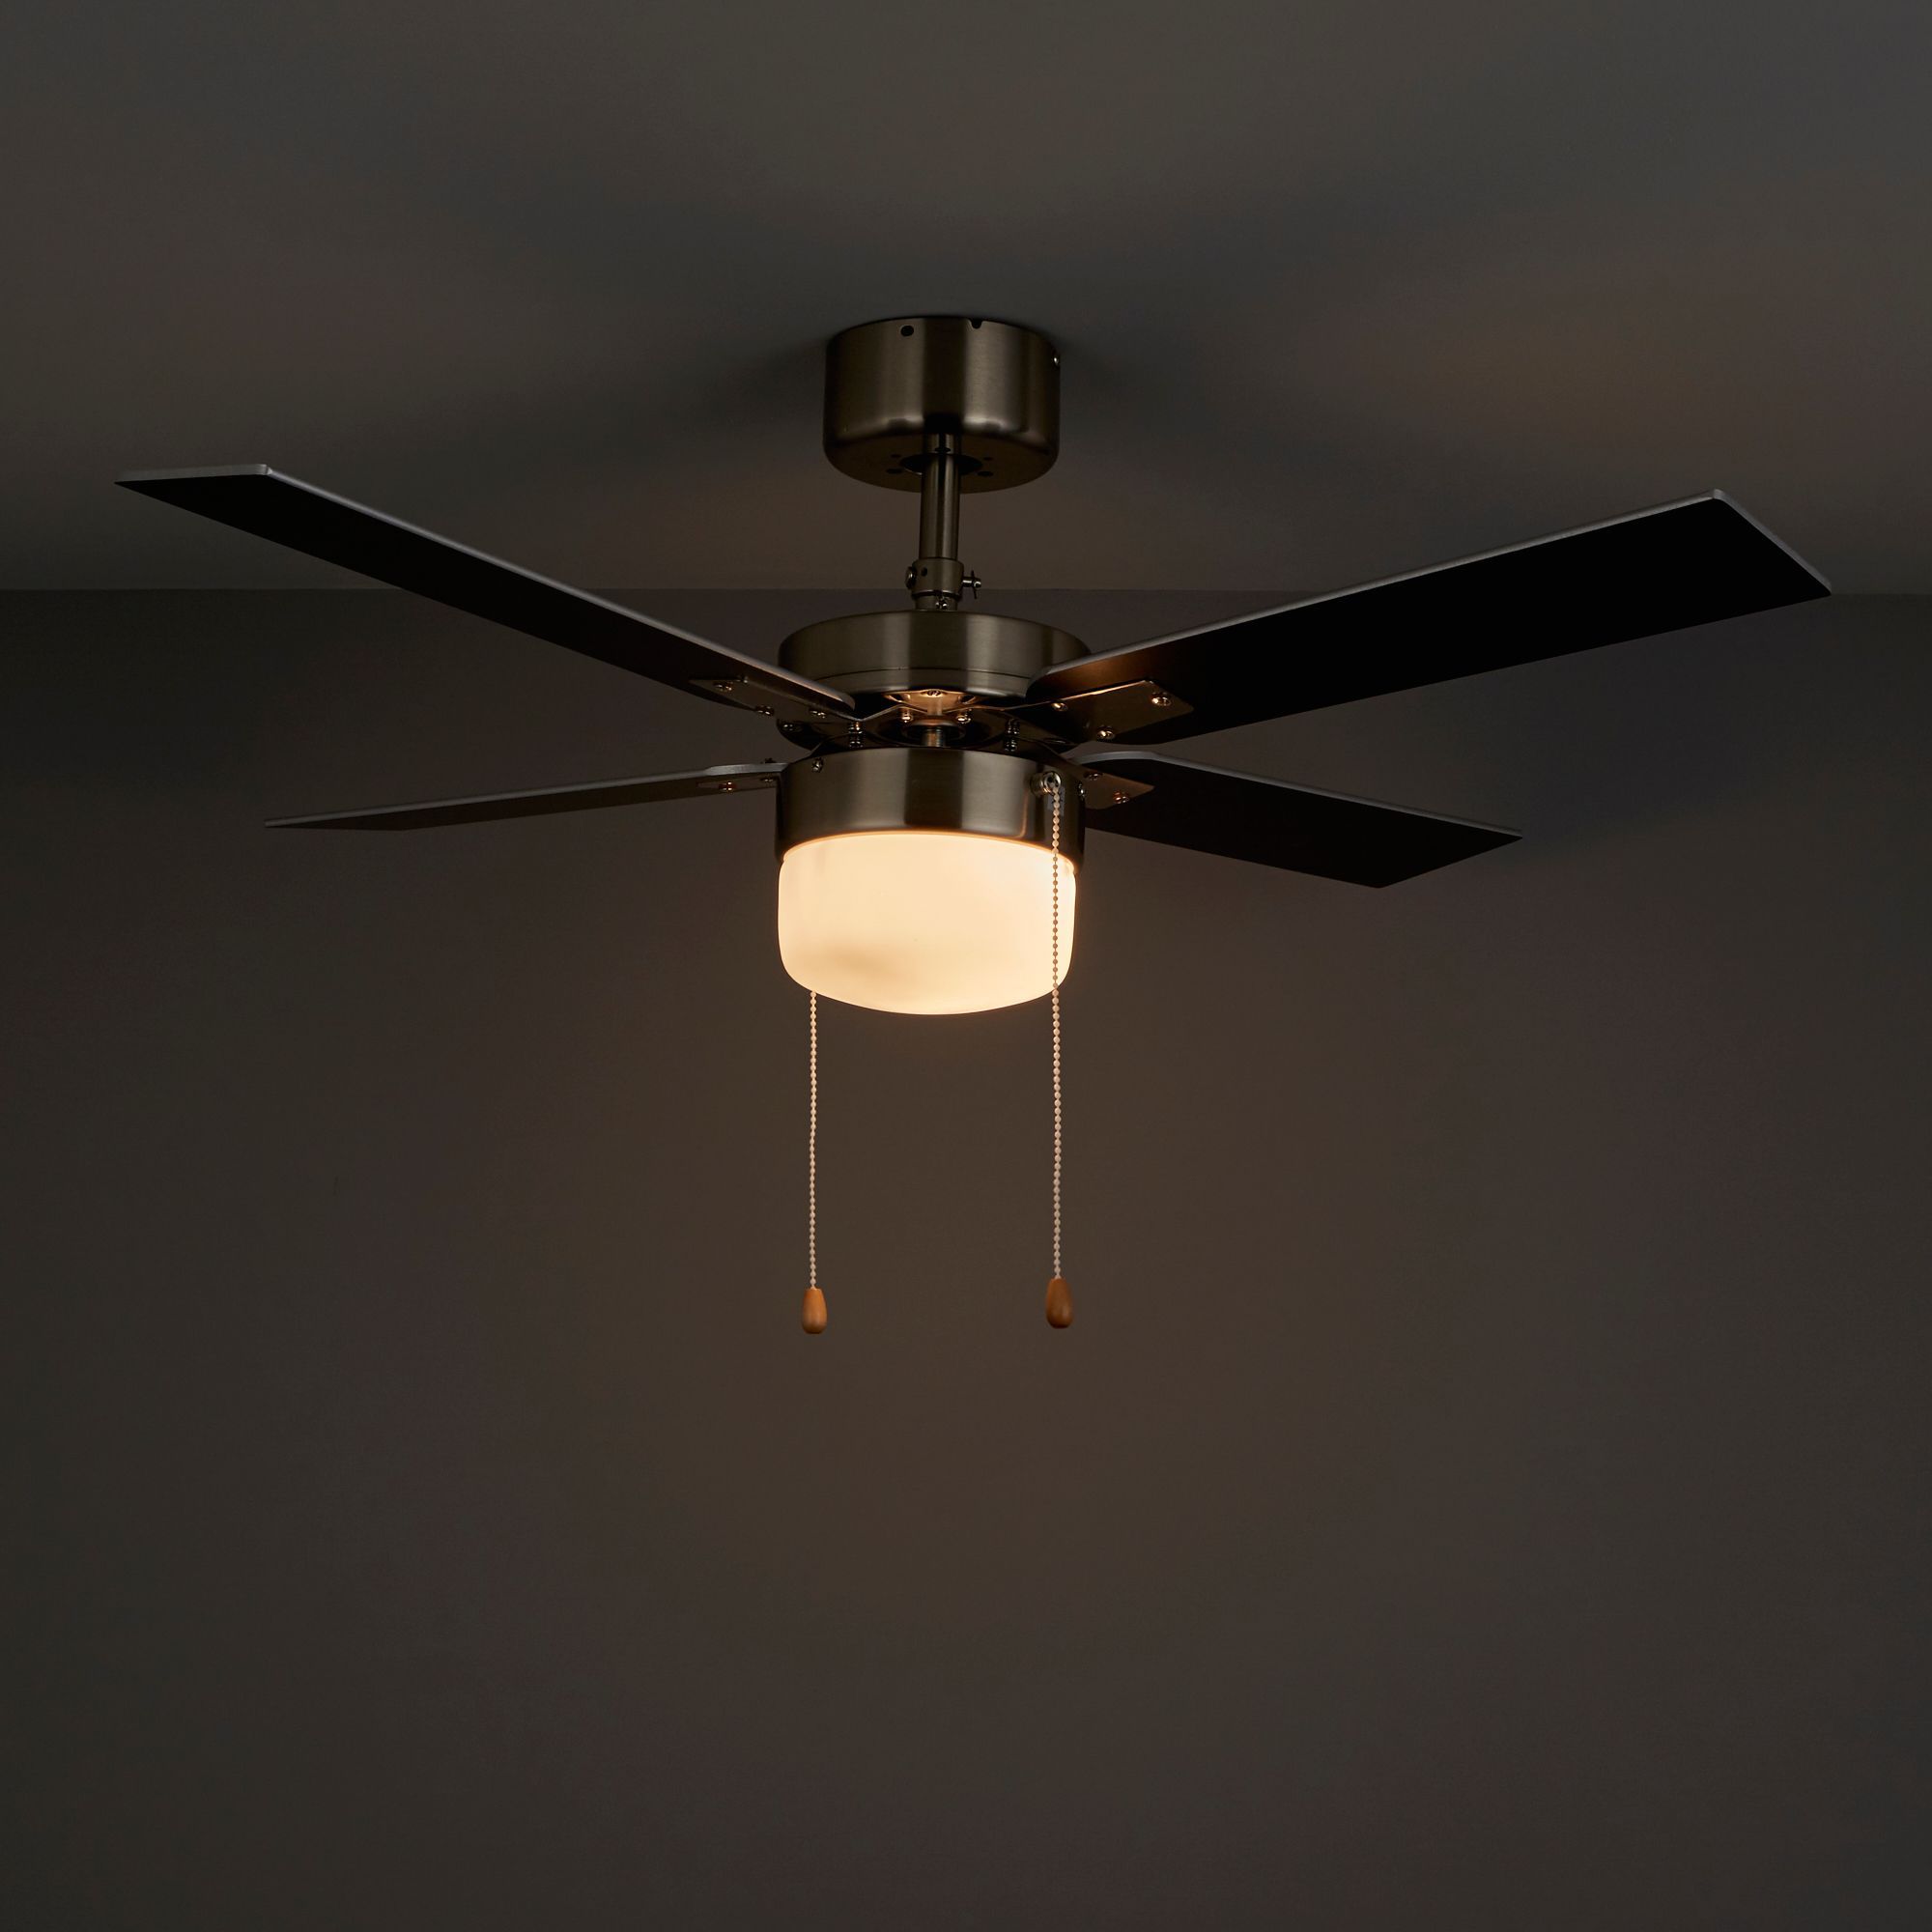 San Antonio Black Brushed Chrome Effect Ceiling Fan Light Departments Diy At B Q